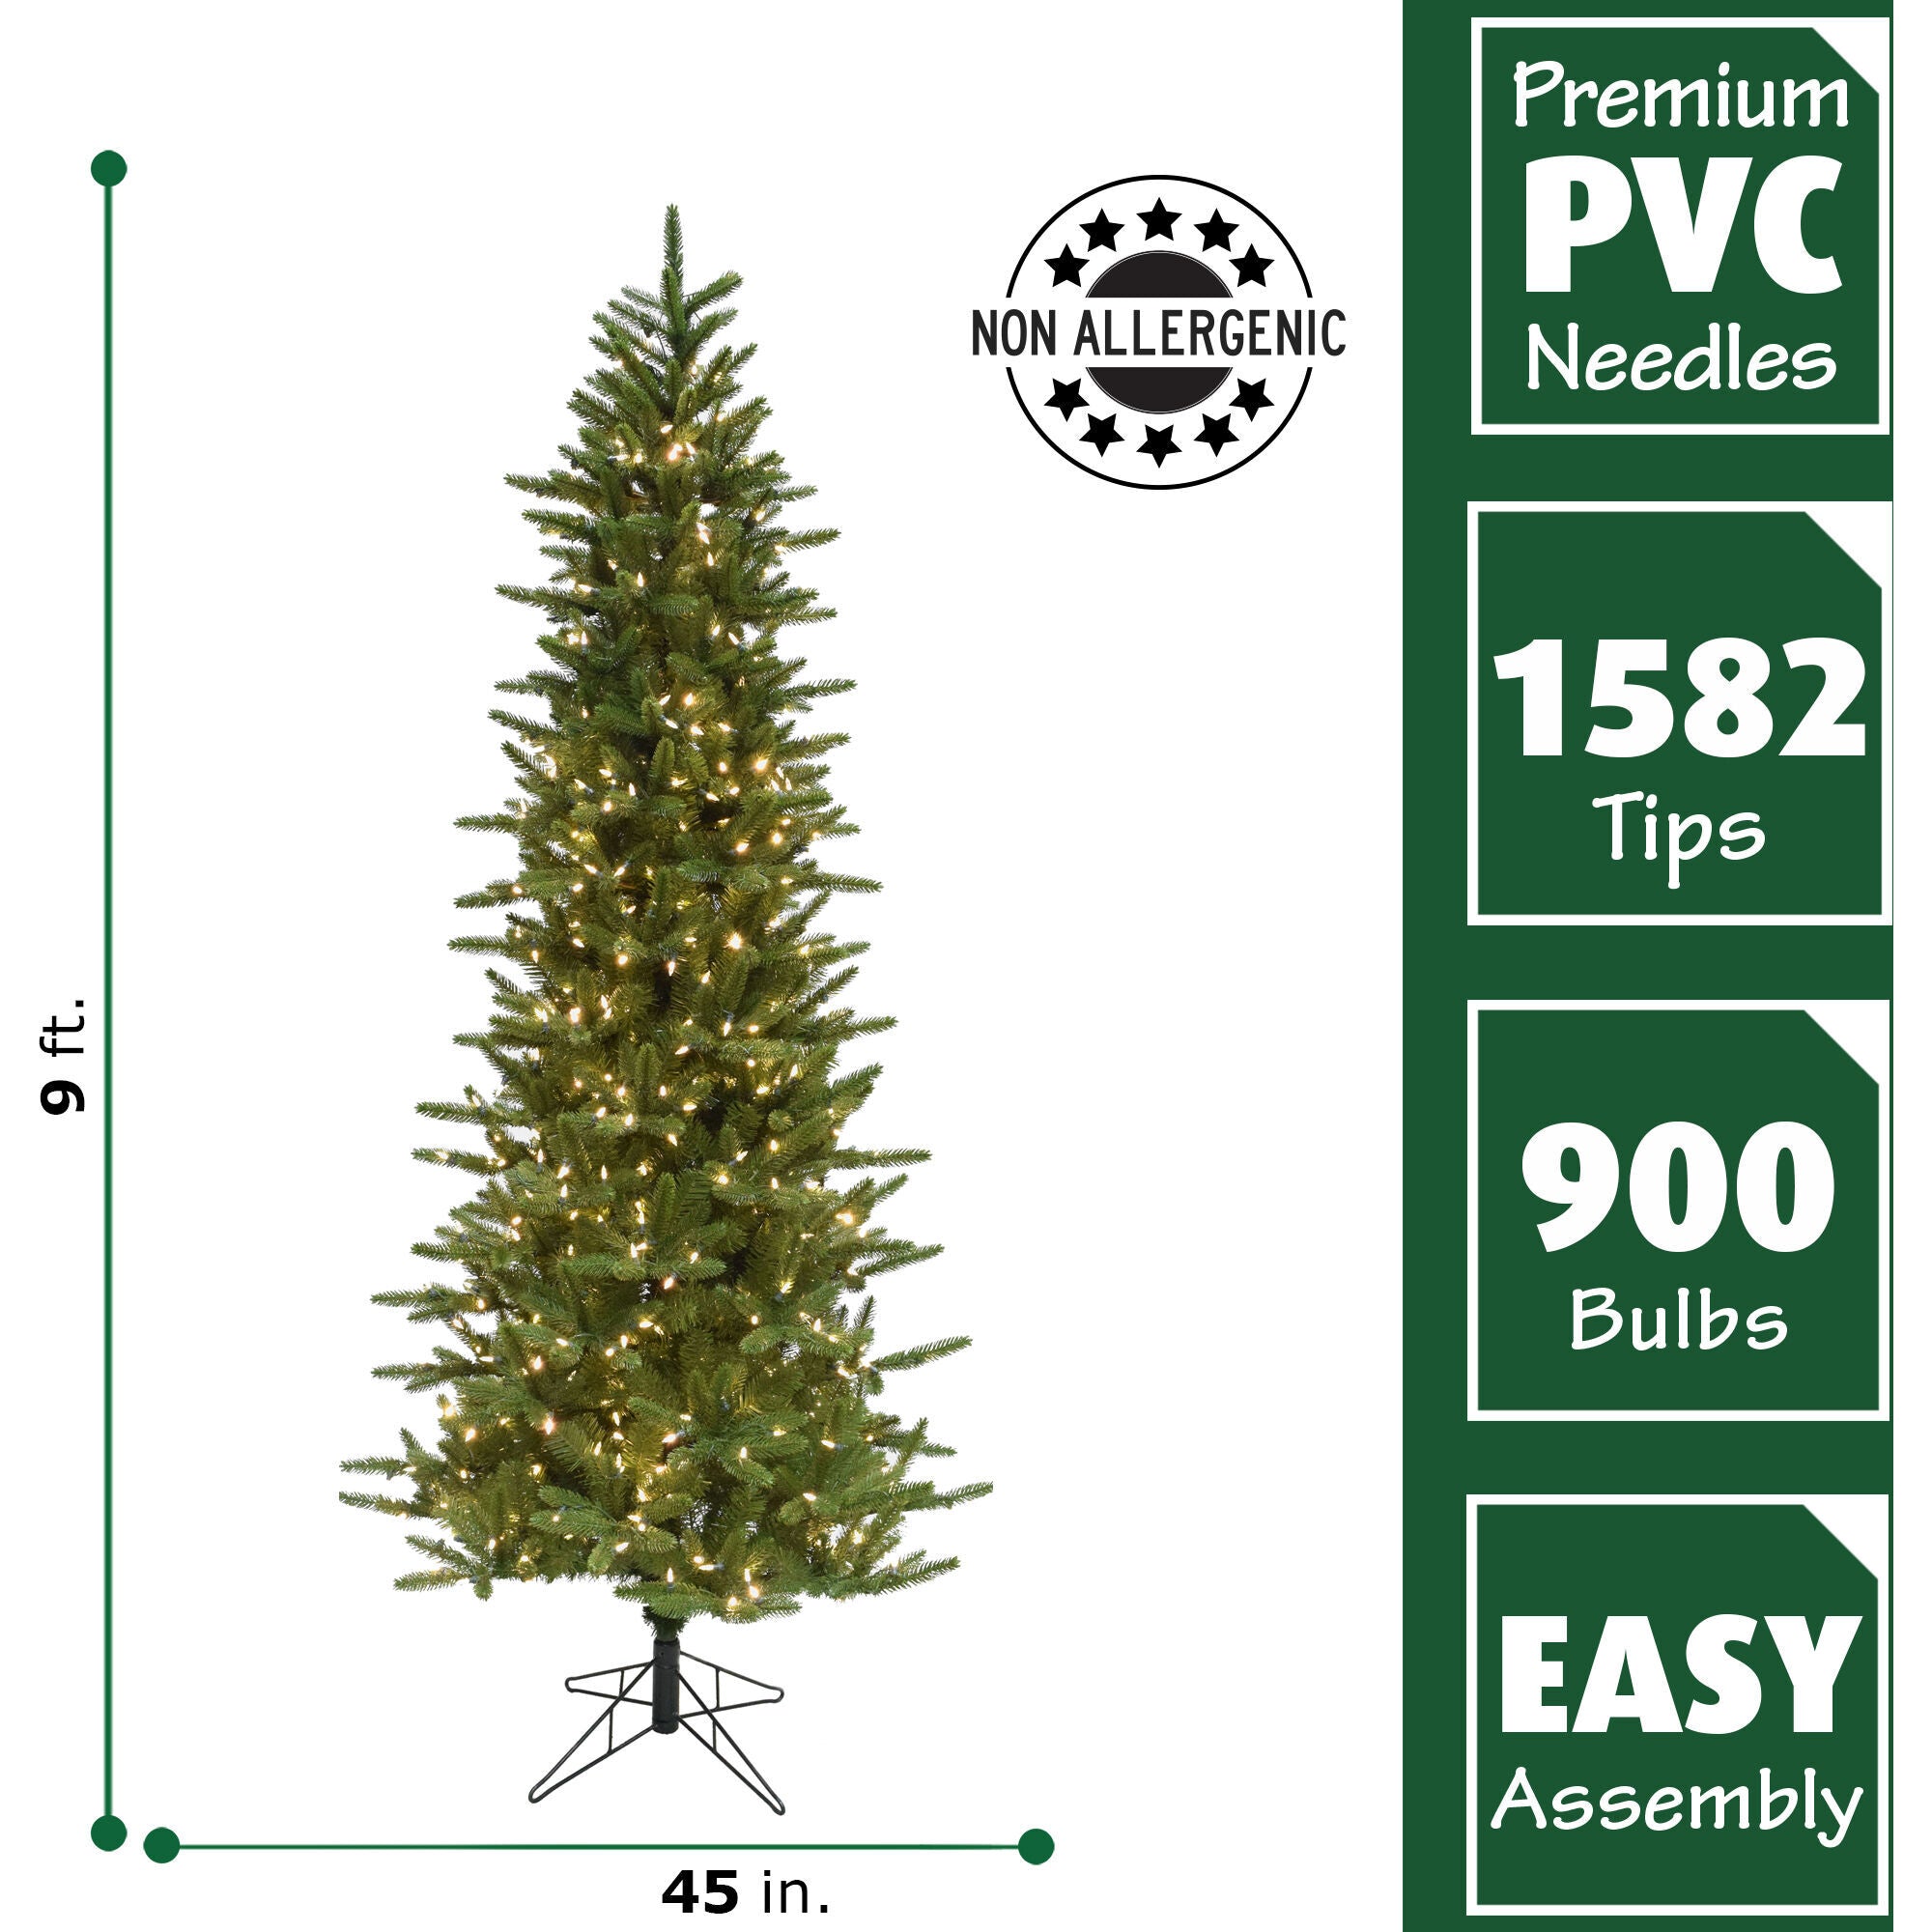 Fraser Hill Farm -  9 Ft. Carmel Pine Slim Artificial Christmas Tree with Warm White LED String Lighting